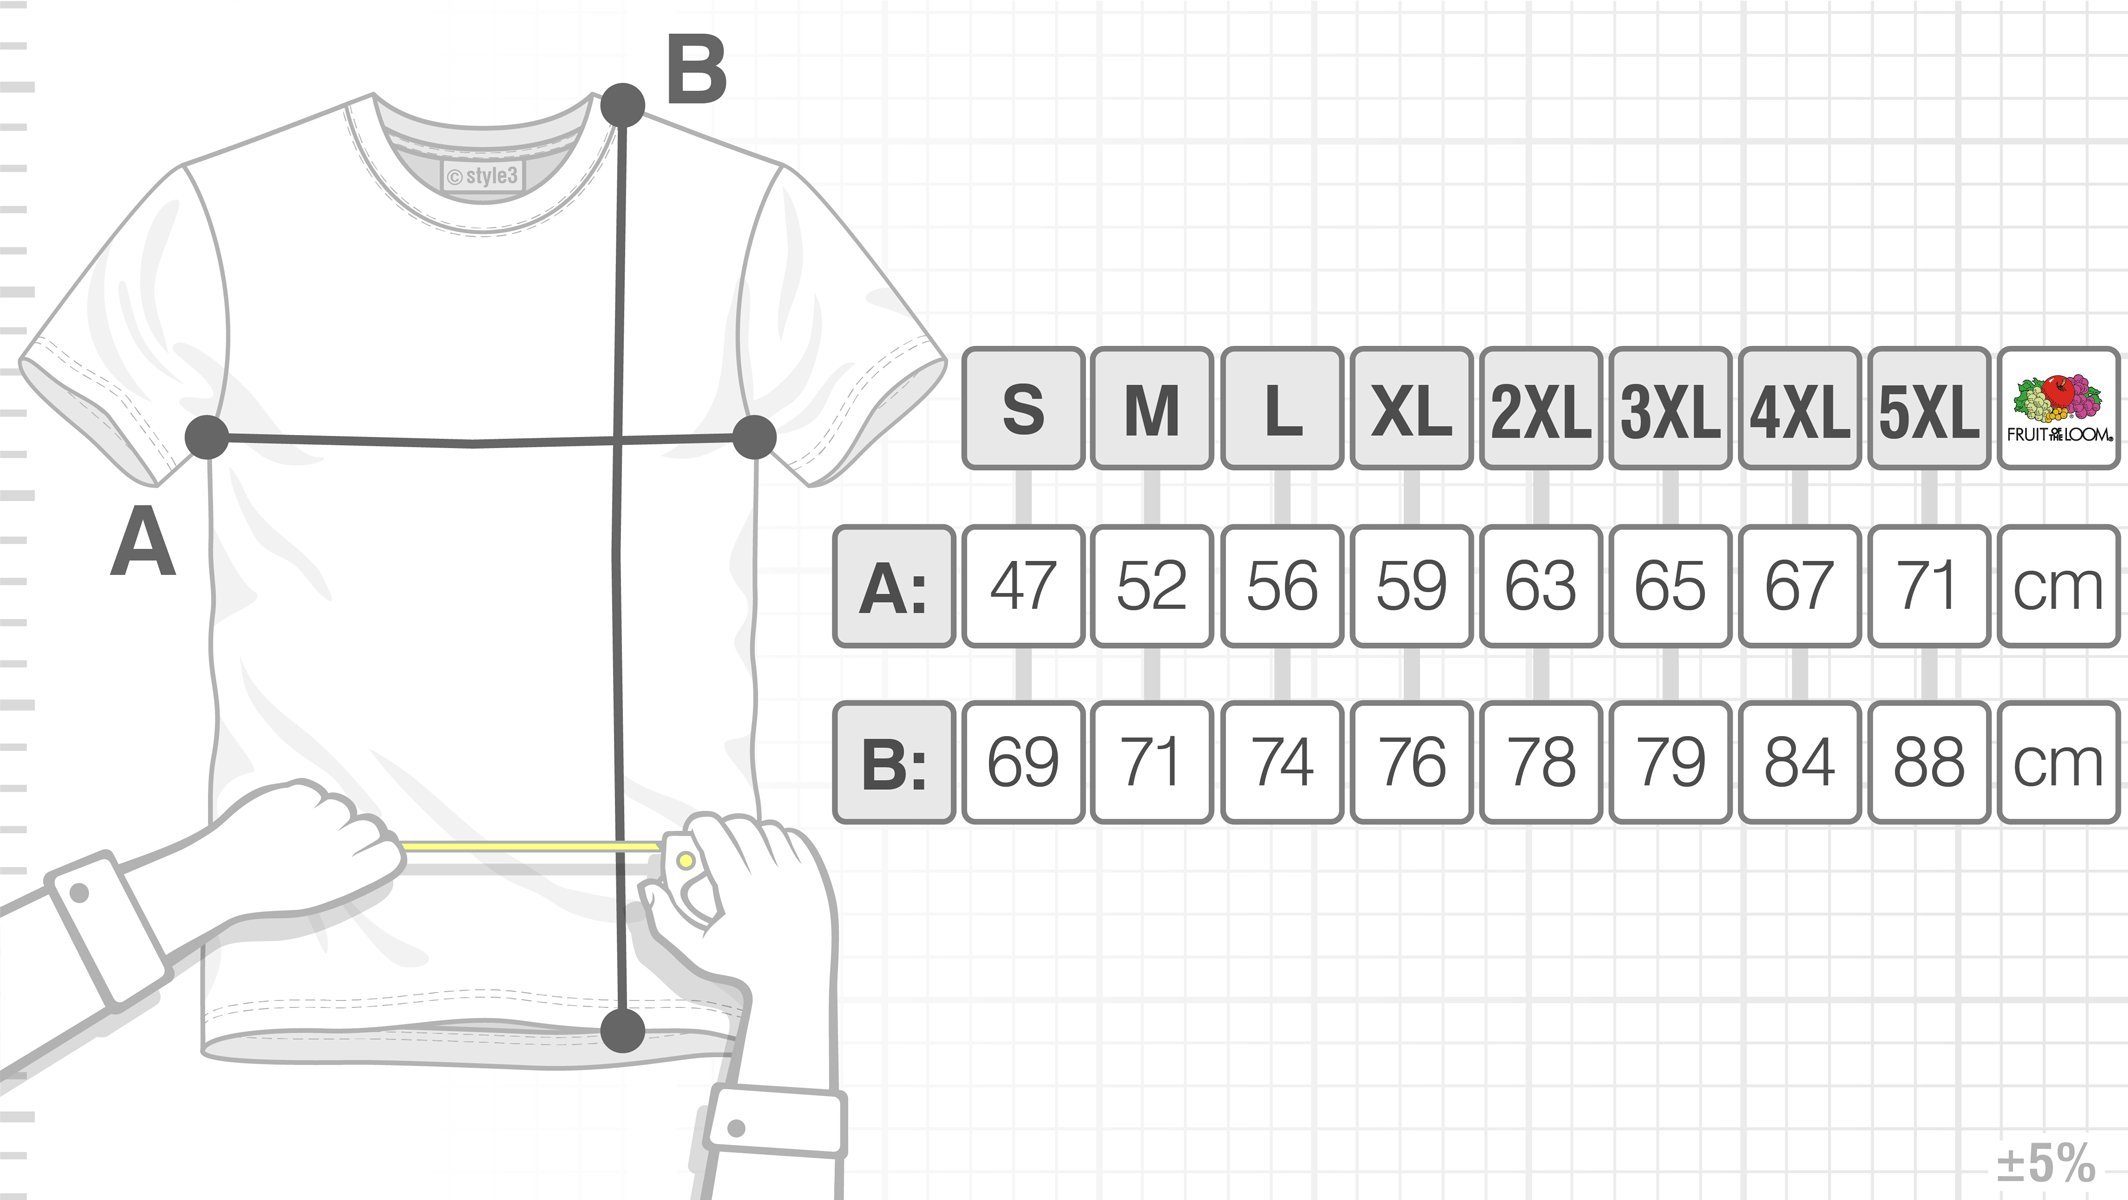 metroid nes Blaupause snes style3 Print-Shirt switch grün T-Shirt Samus Herren gamer nerd